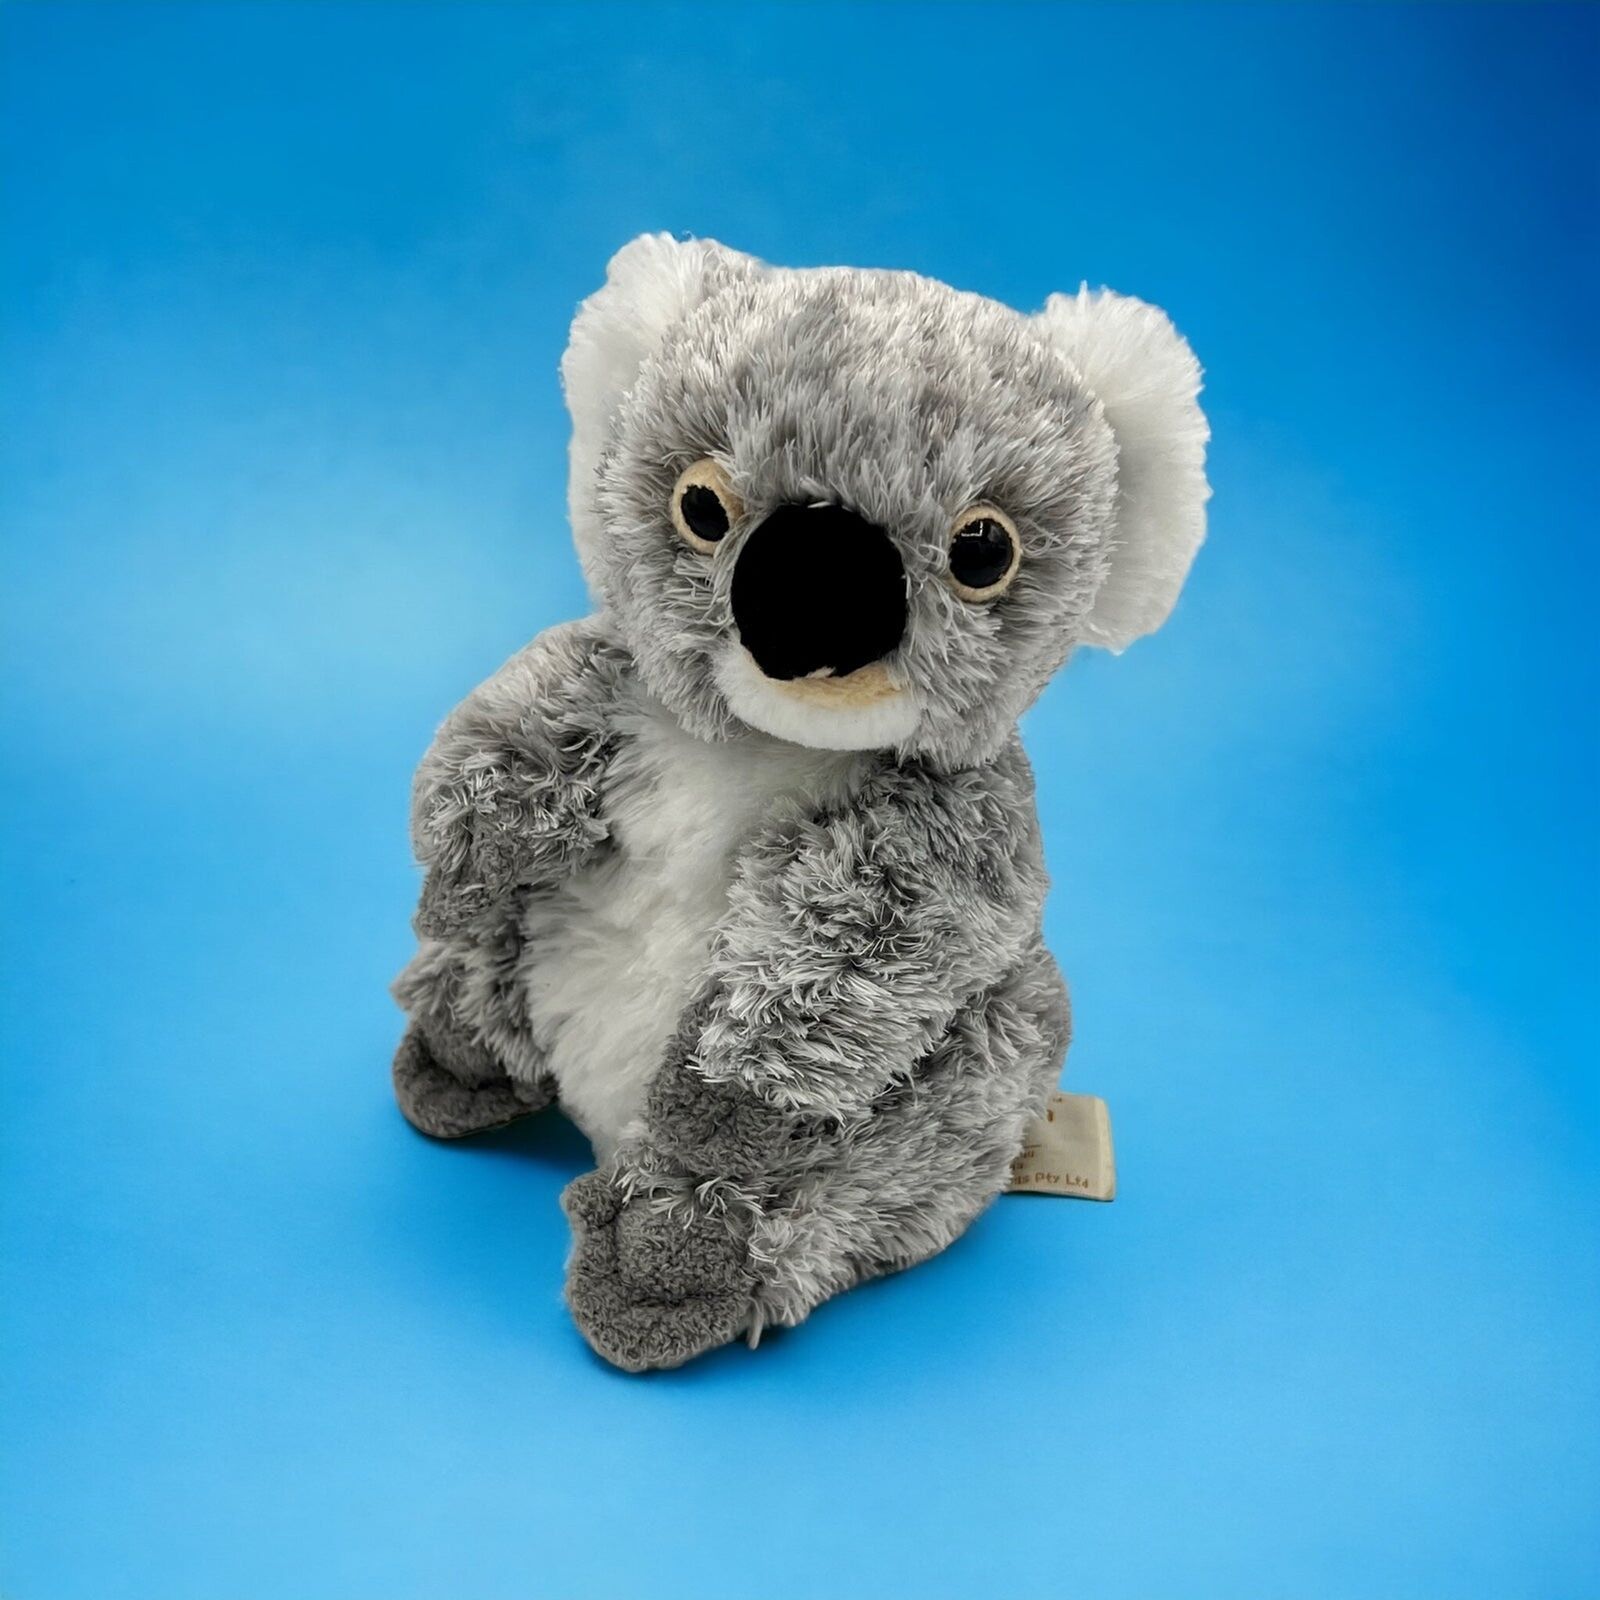 Minkplush Australian Little Nell The Koala Soft Toy Plush 6” 2003 Vintage RARE